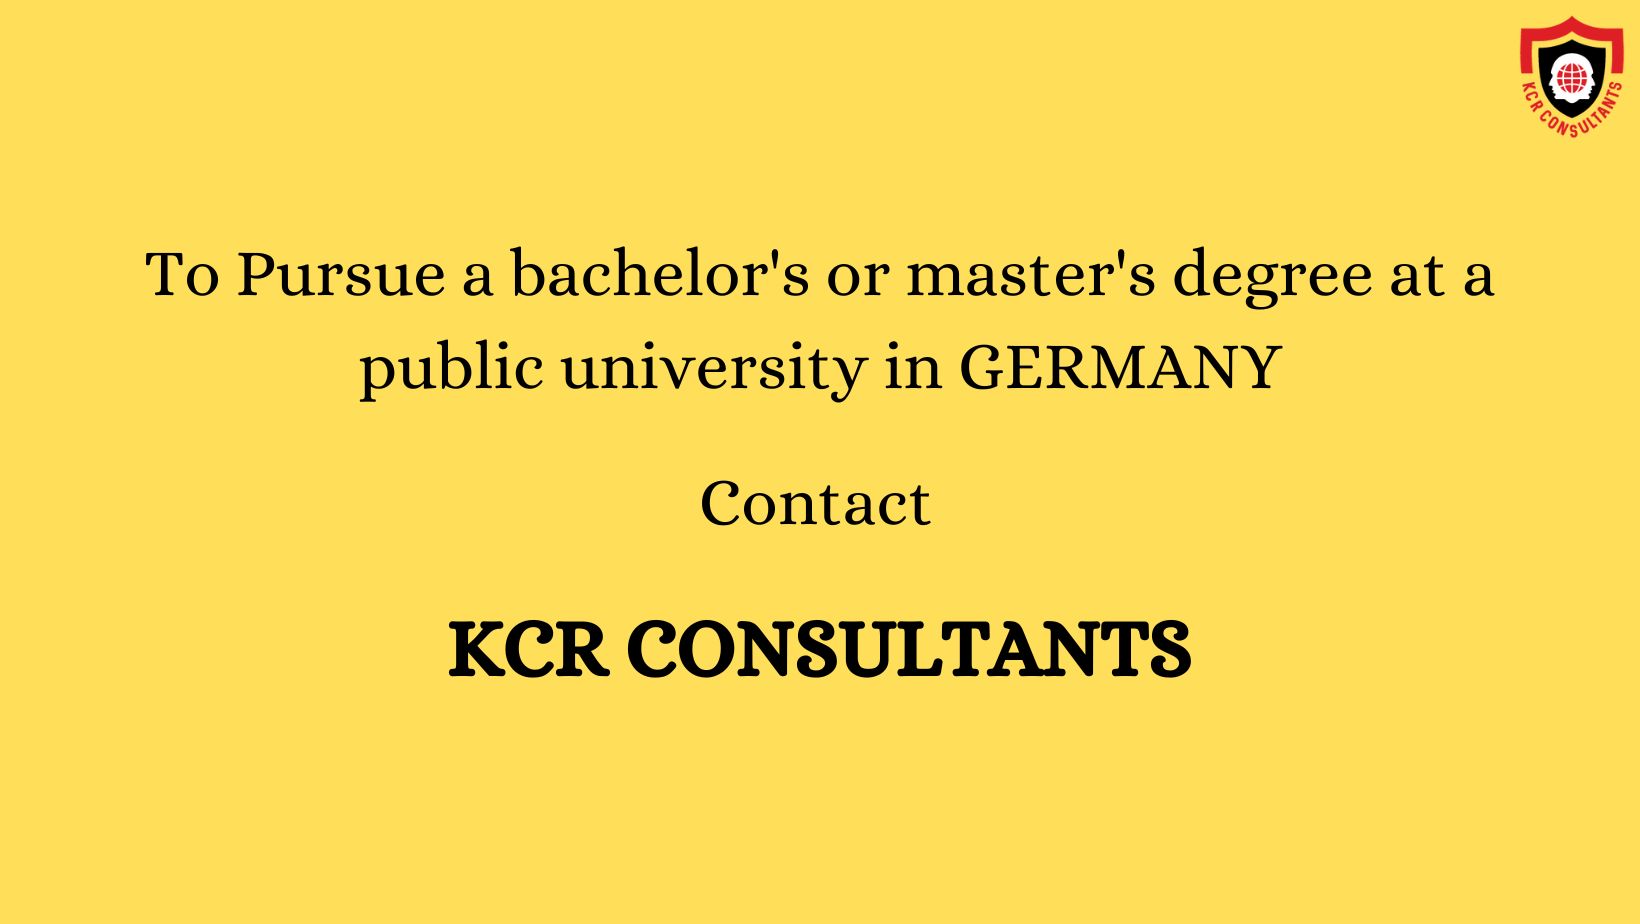 Christian Albrechts University of Kiel _ Kiel University - KCR CONSULTANTS - Contact us